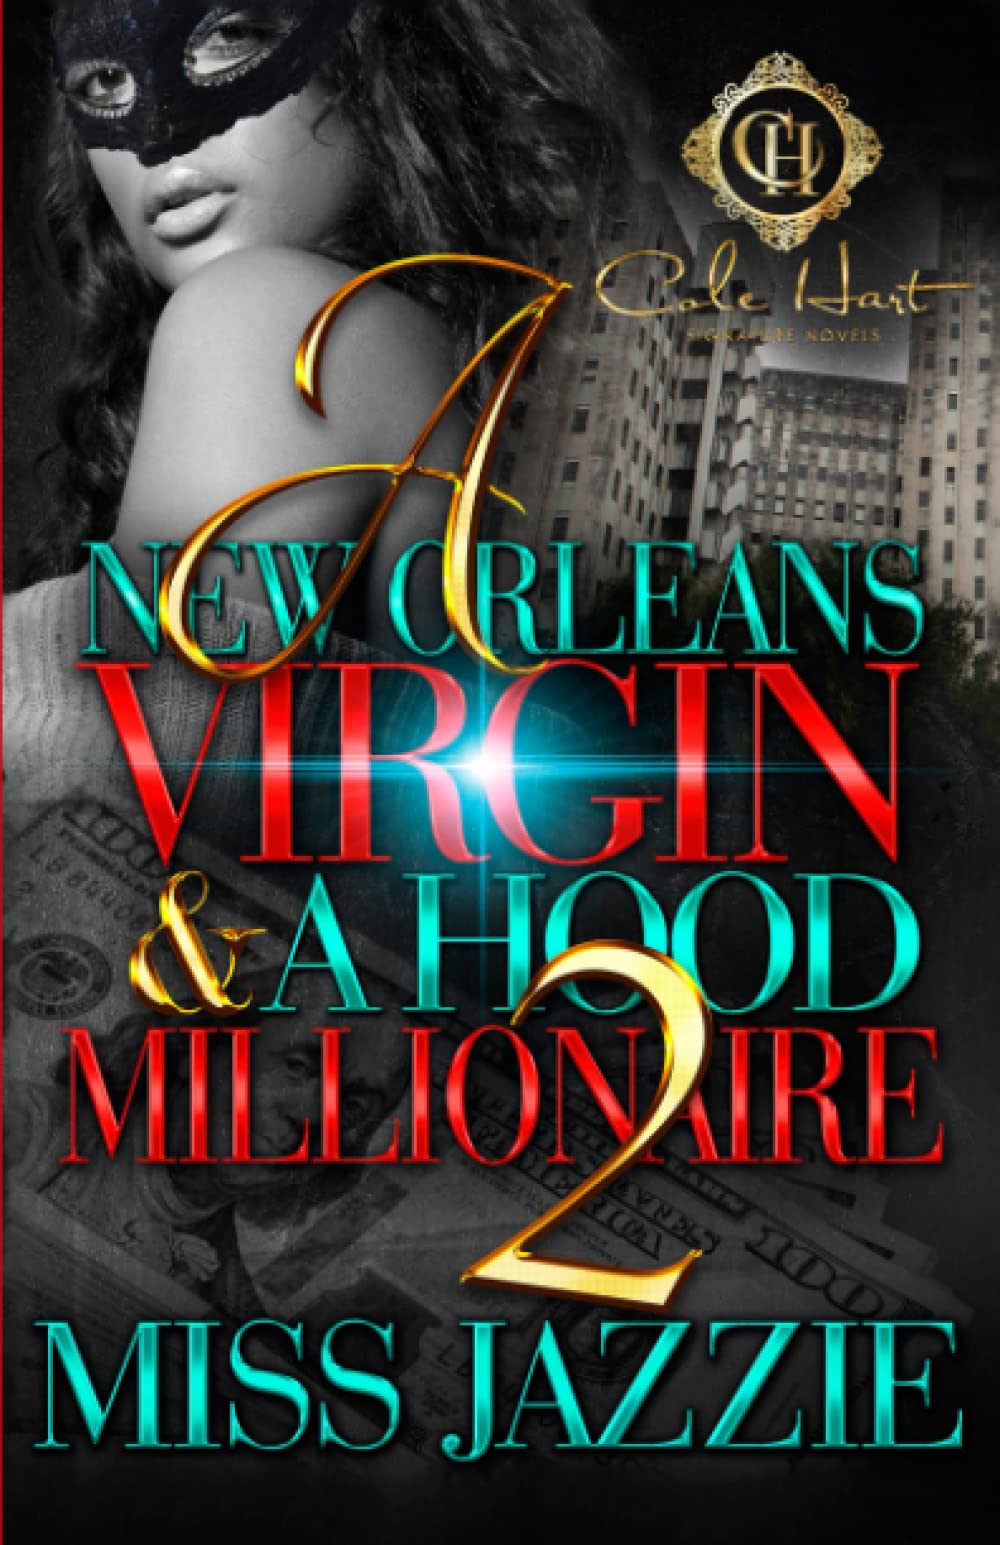 A New Orleans Virgin & A Hood Millionaire 2 SureShot Books